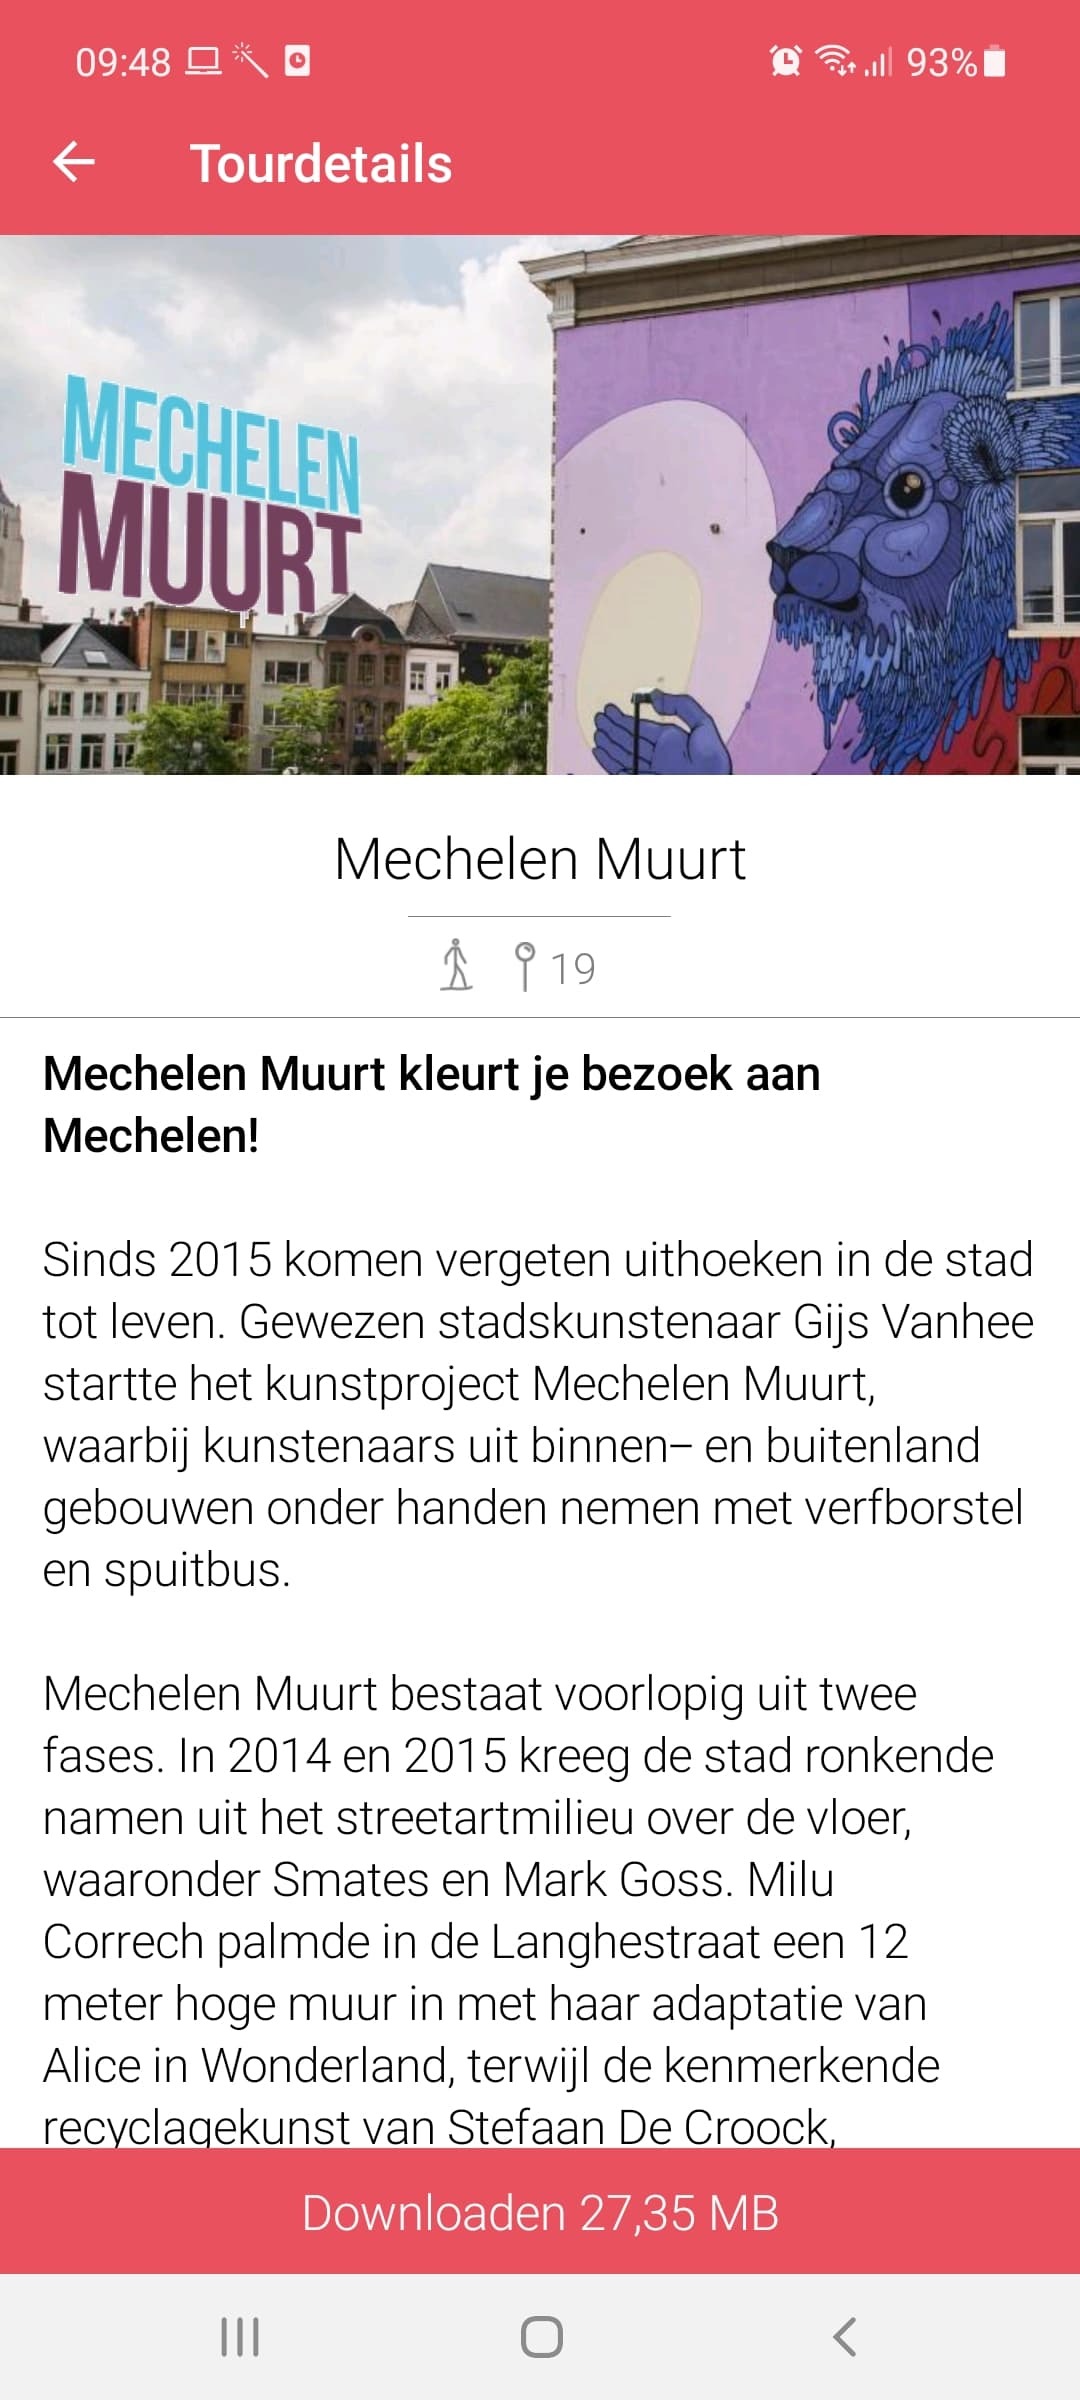 Mechelen Muurt App